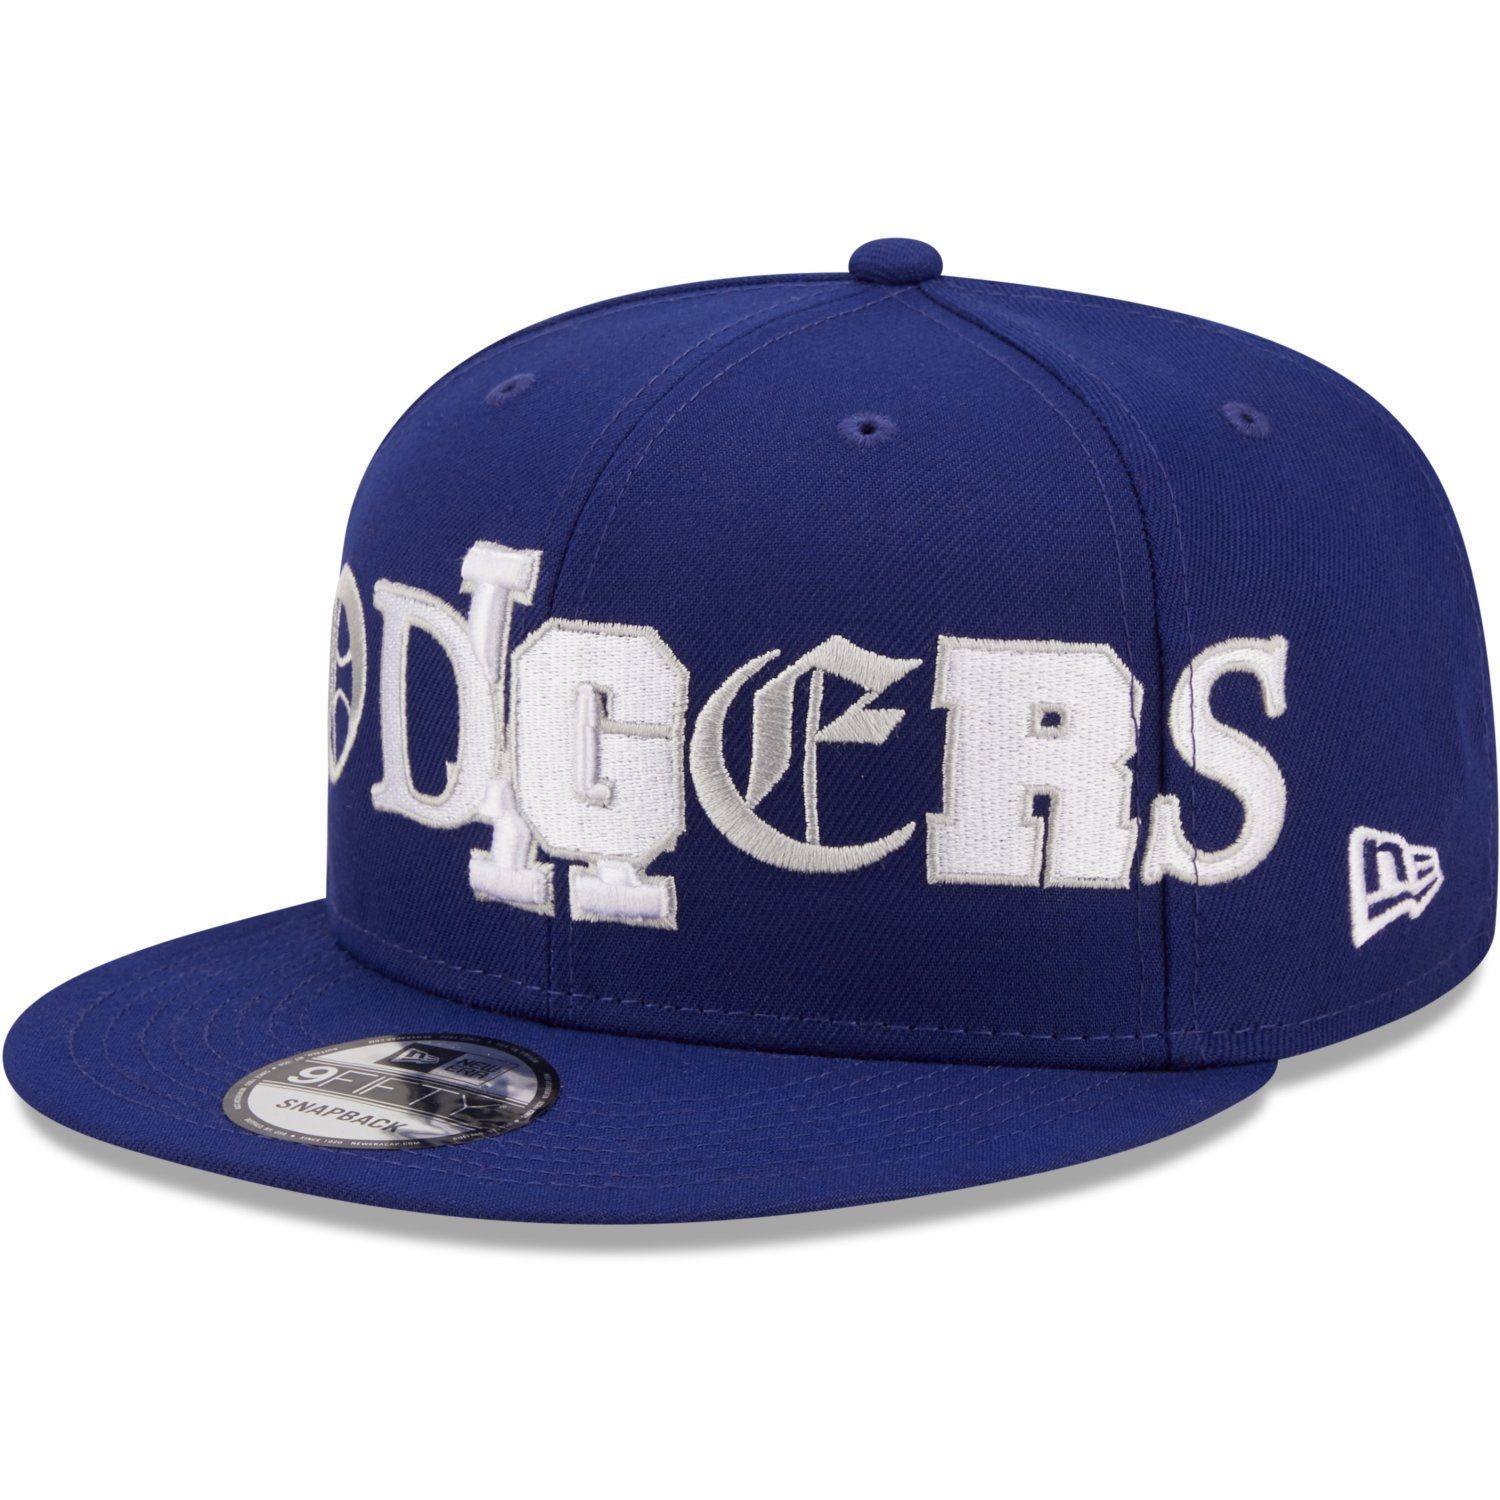 Cap Snapback New TYPOGRAPHY Dodgers Los Angeles 9Fifty Era